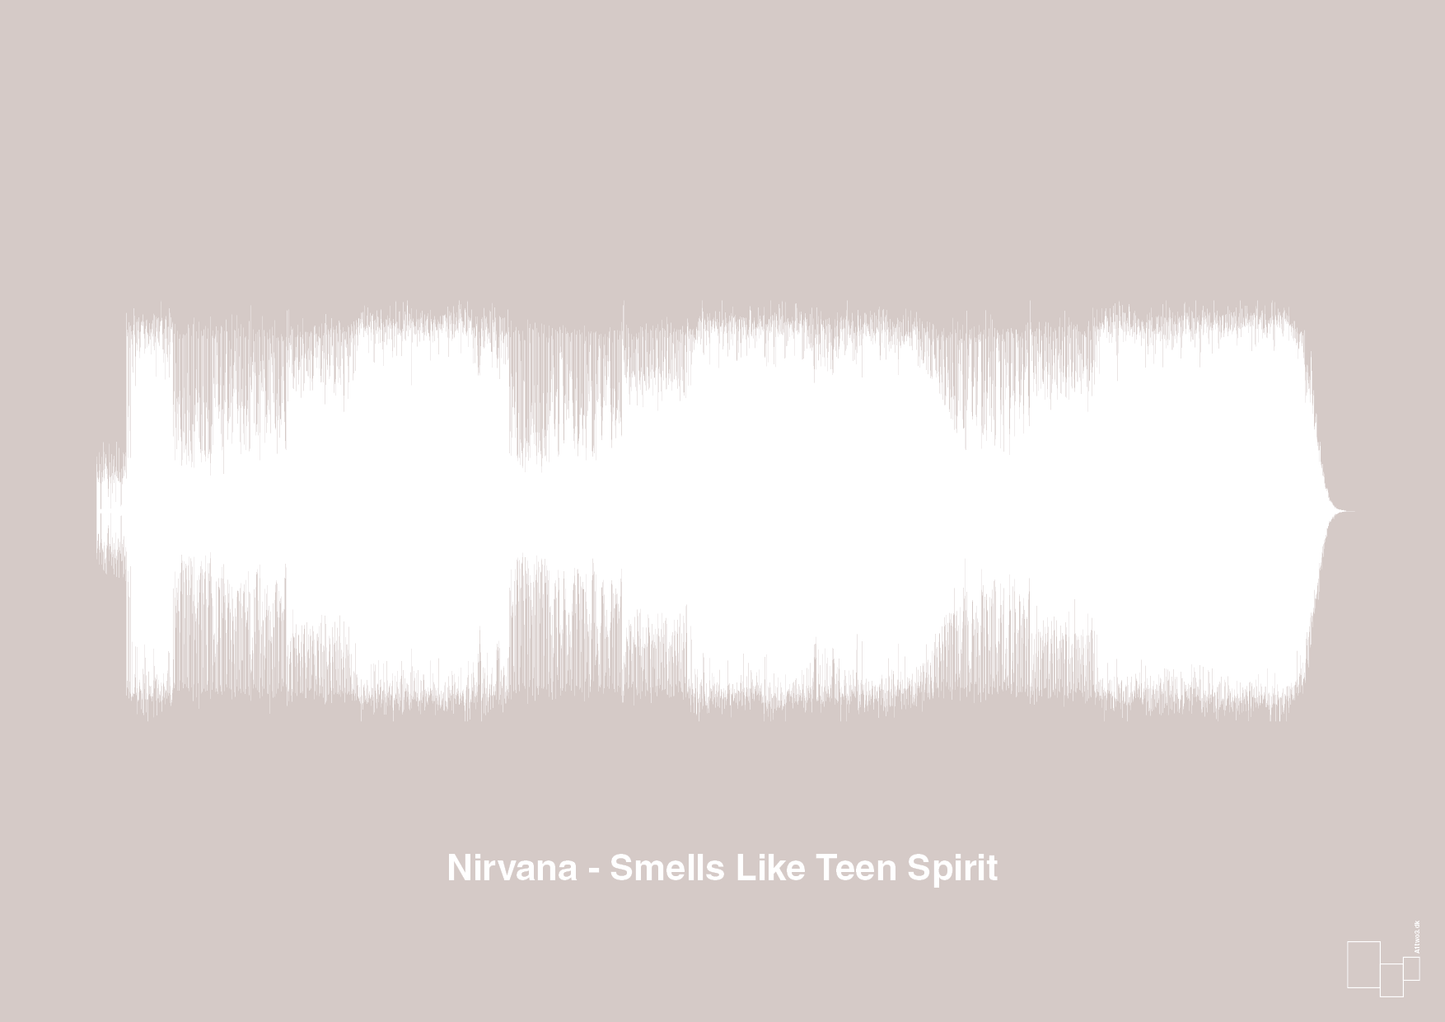 nirvana - smells like teen spirit - Plakat med Musik i Broken Beige